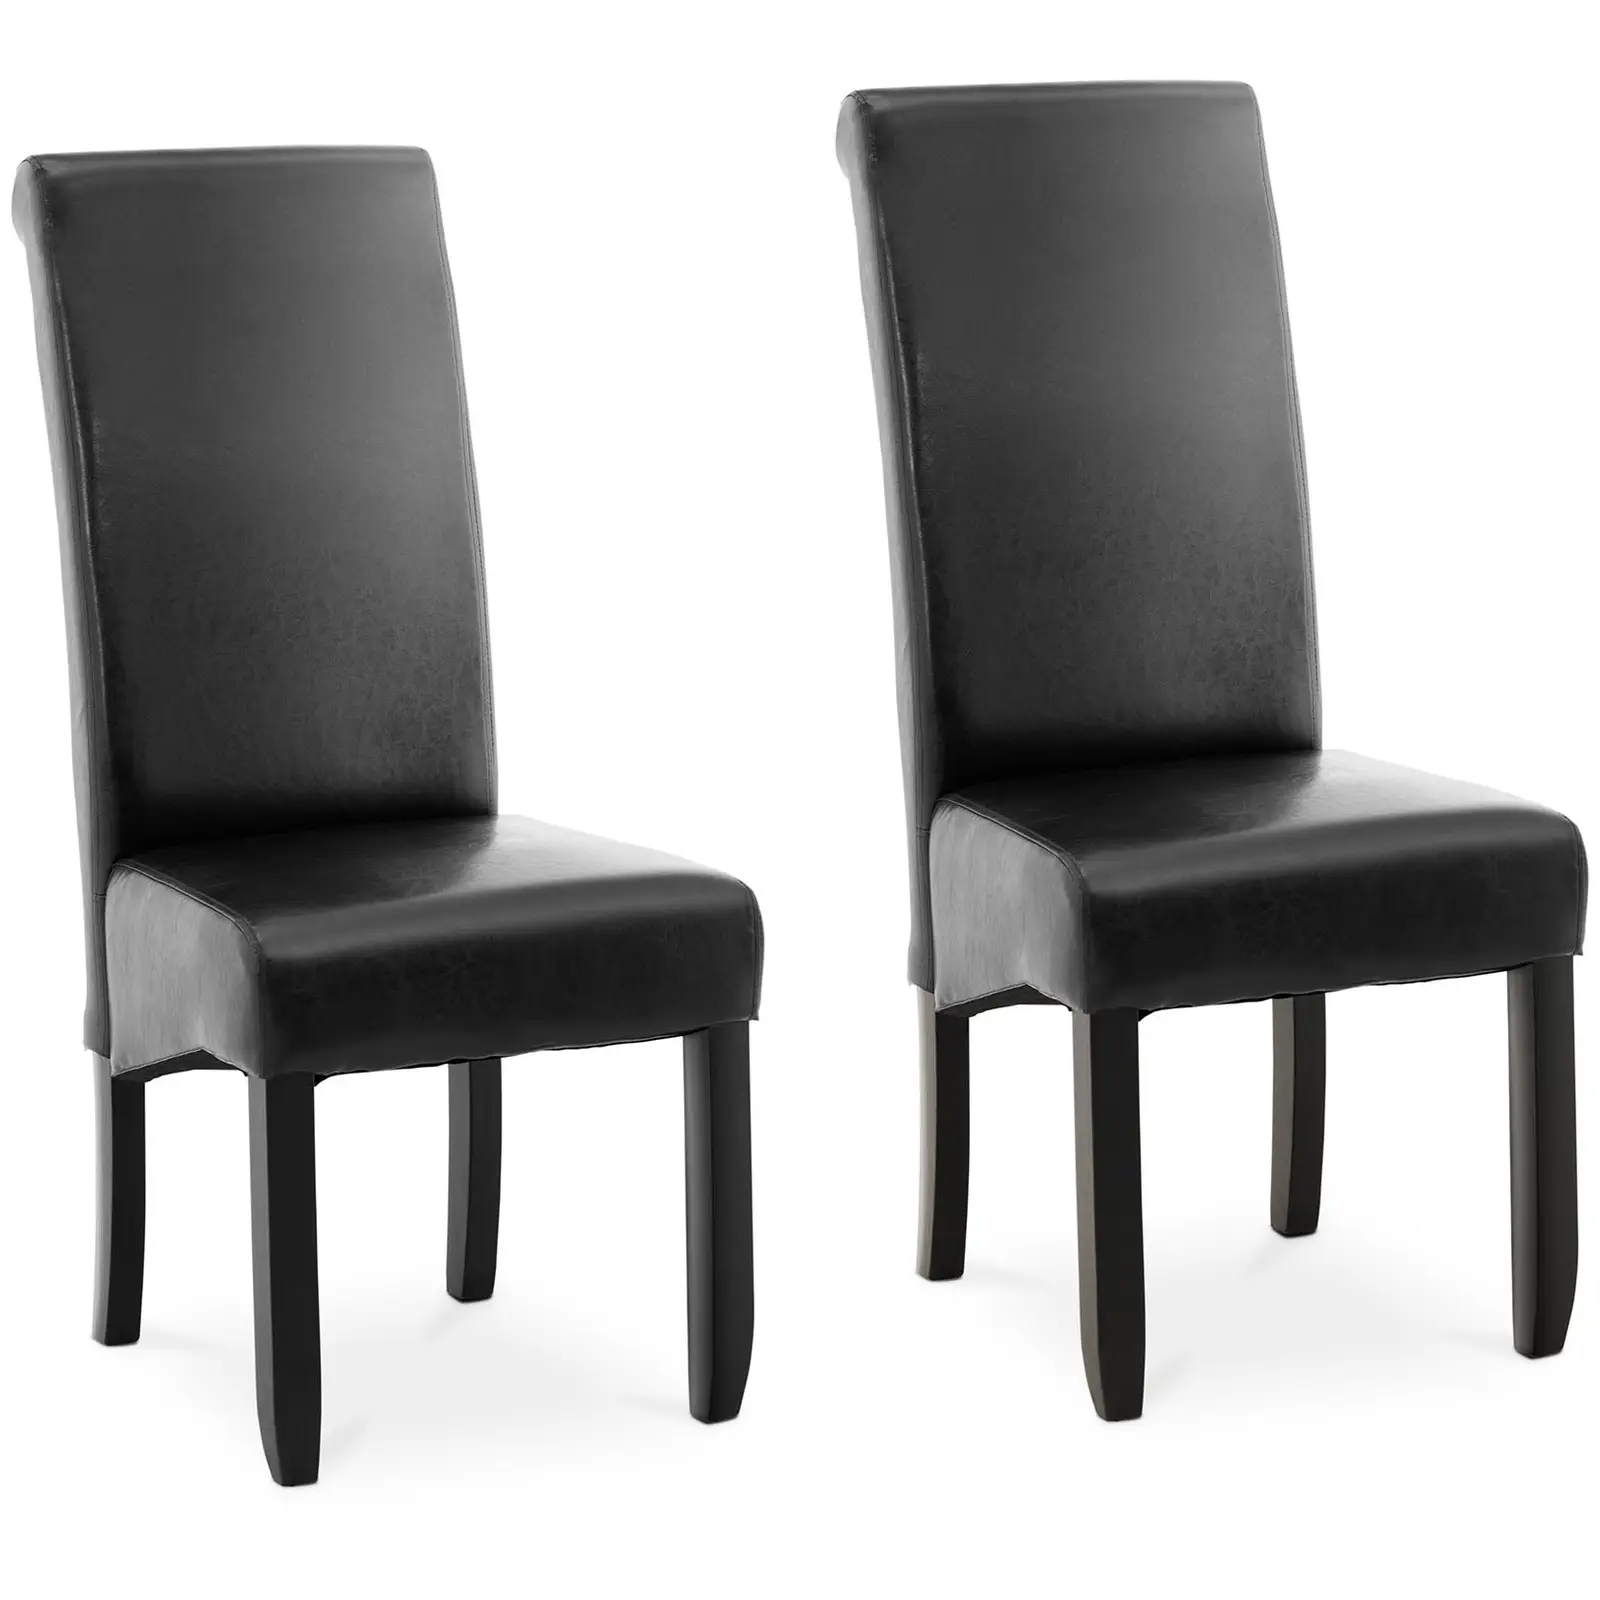 Minkšta kėdė - 2 vnt. rinkinys - iki 180 kg - sėdynės matmenys: 44,5 x 44 cm - juoda